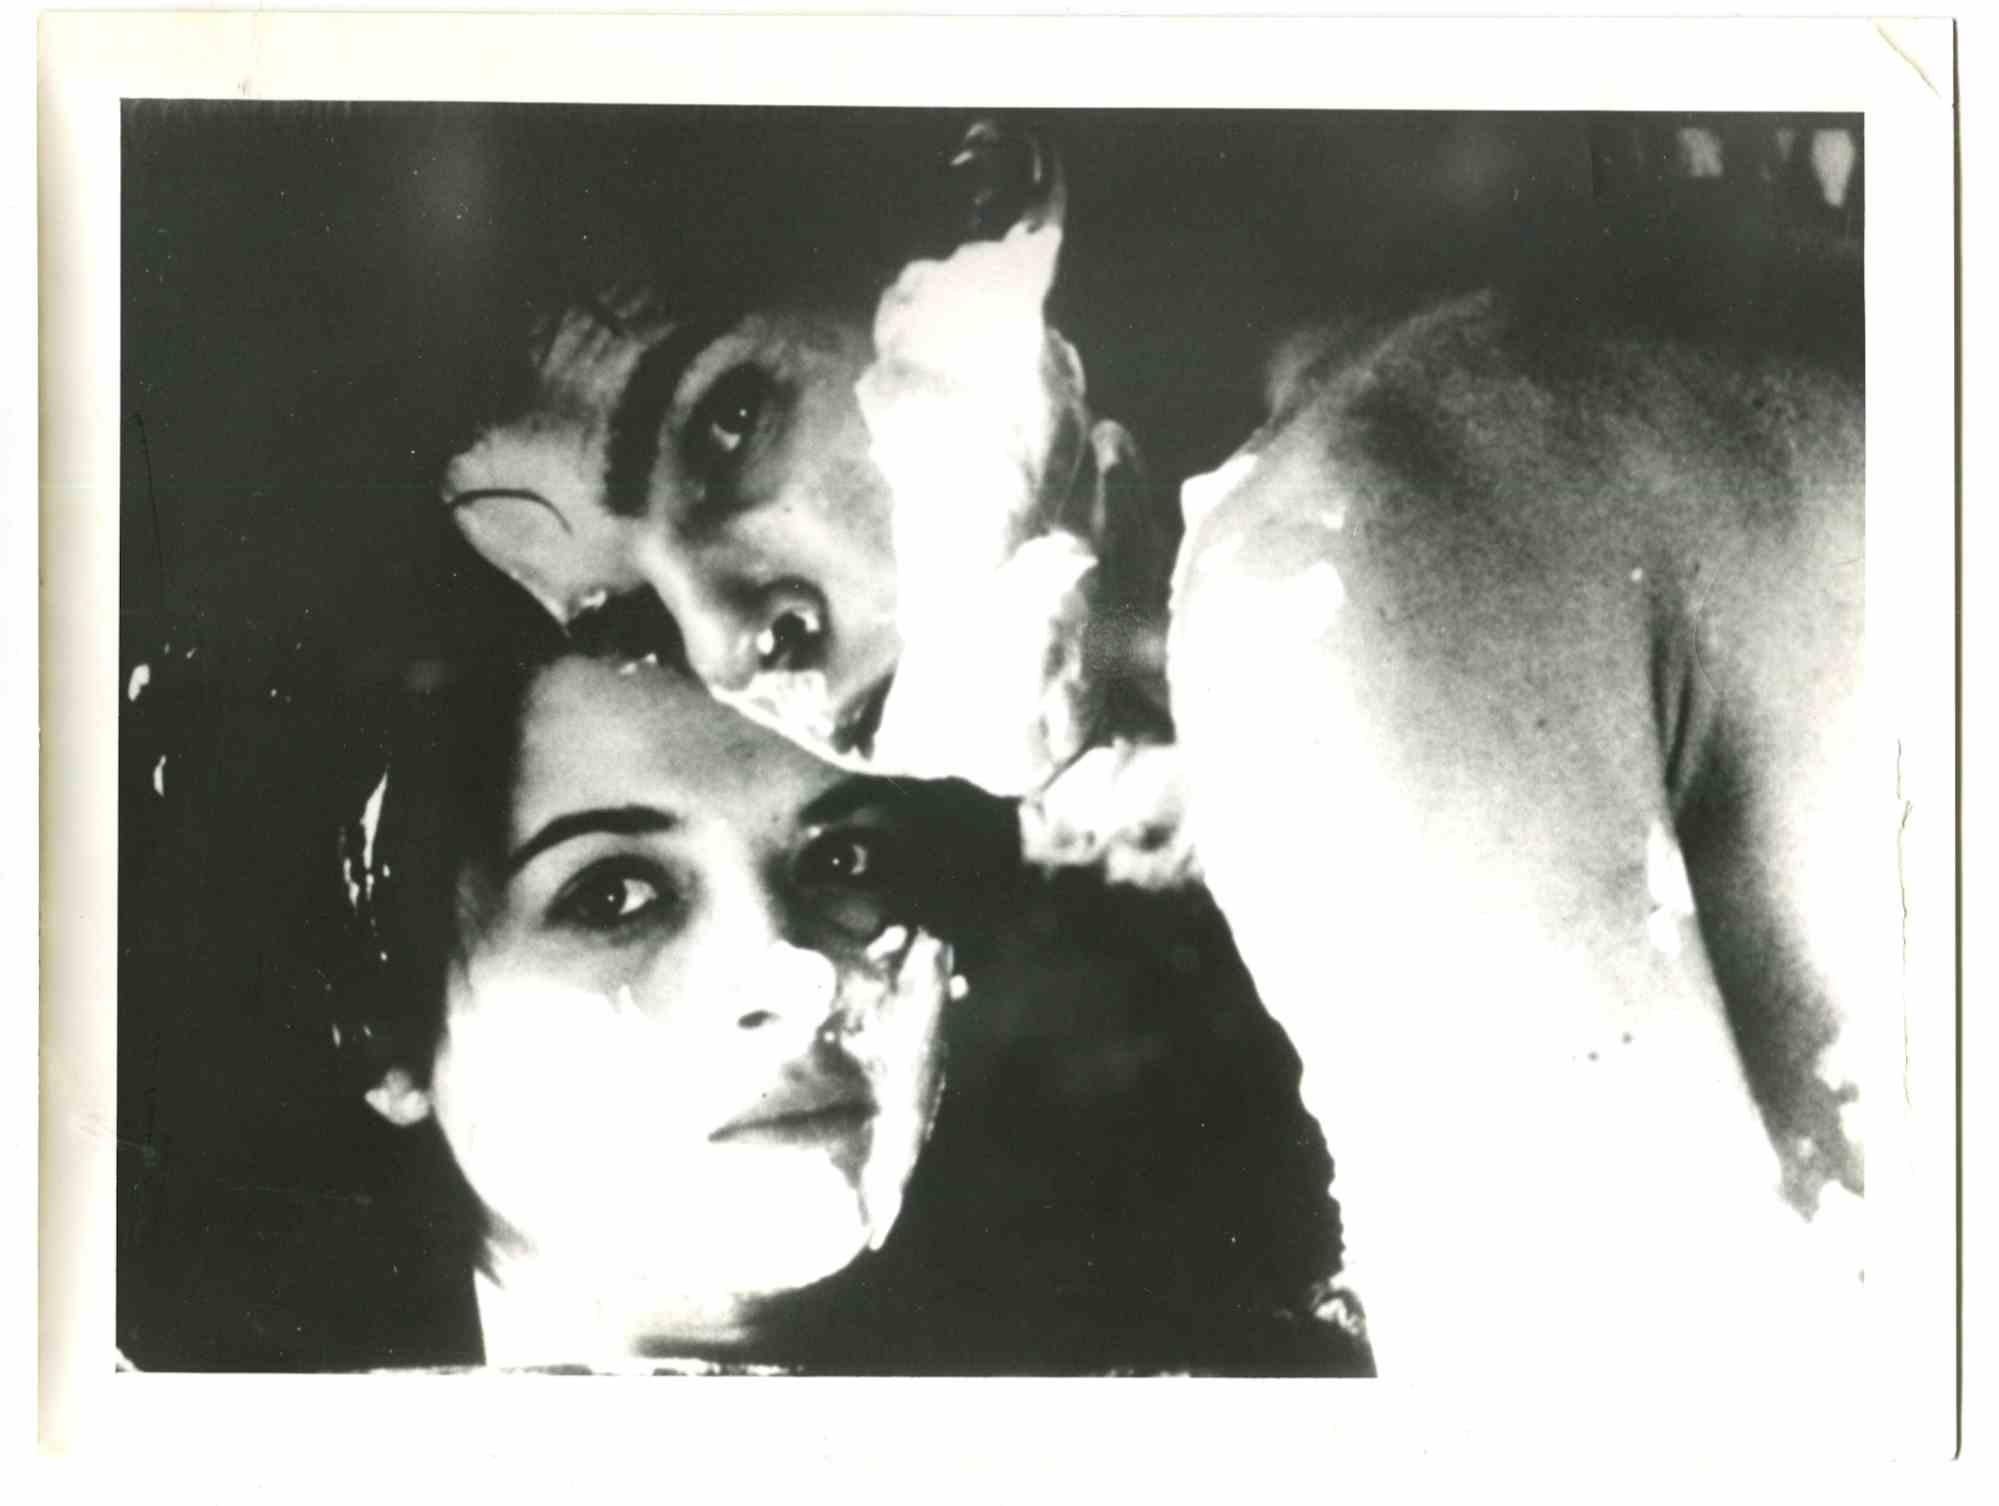 Unknown Figurative Photograph - Juliette Binoche and Denis Lavant in Mauvais Sang - vintage photo - 1986